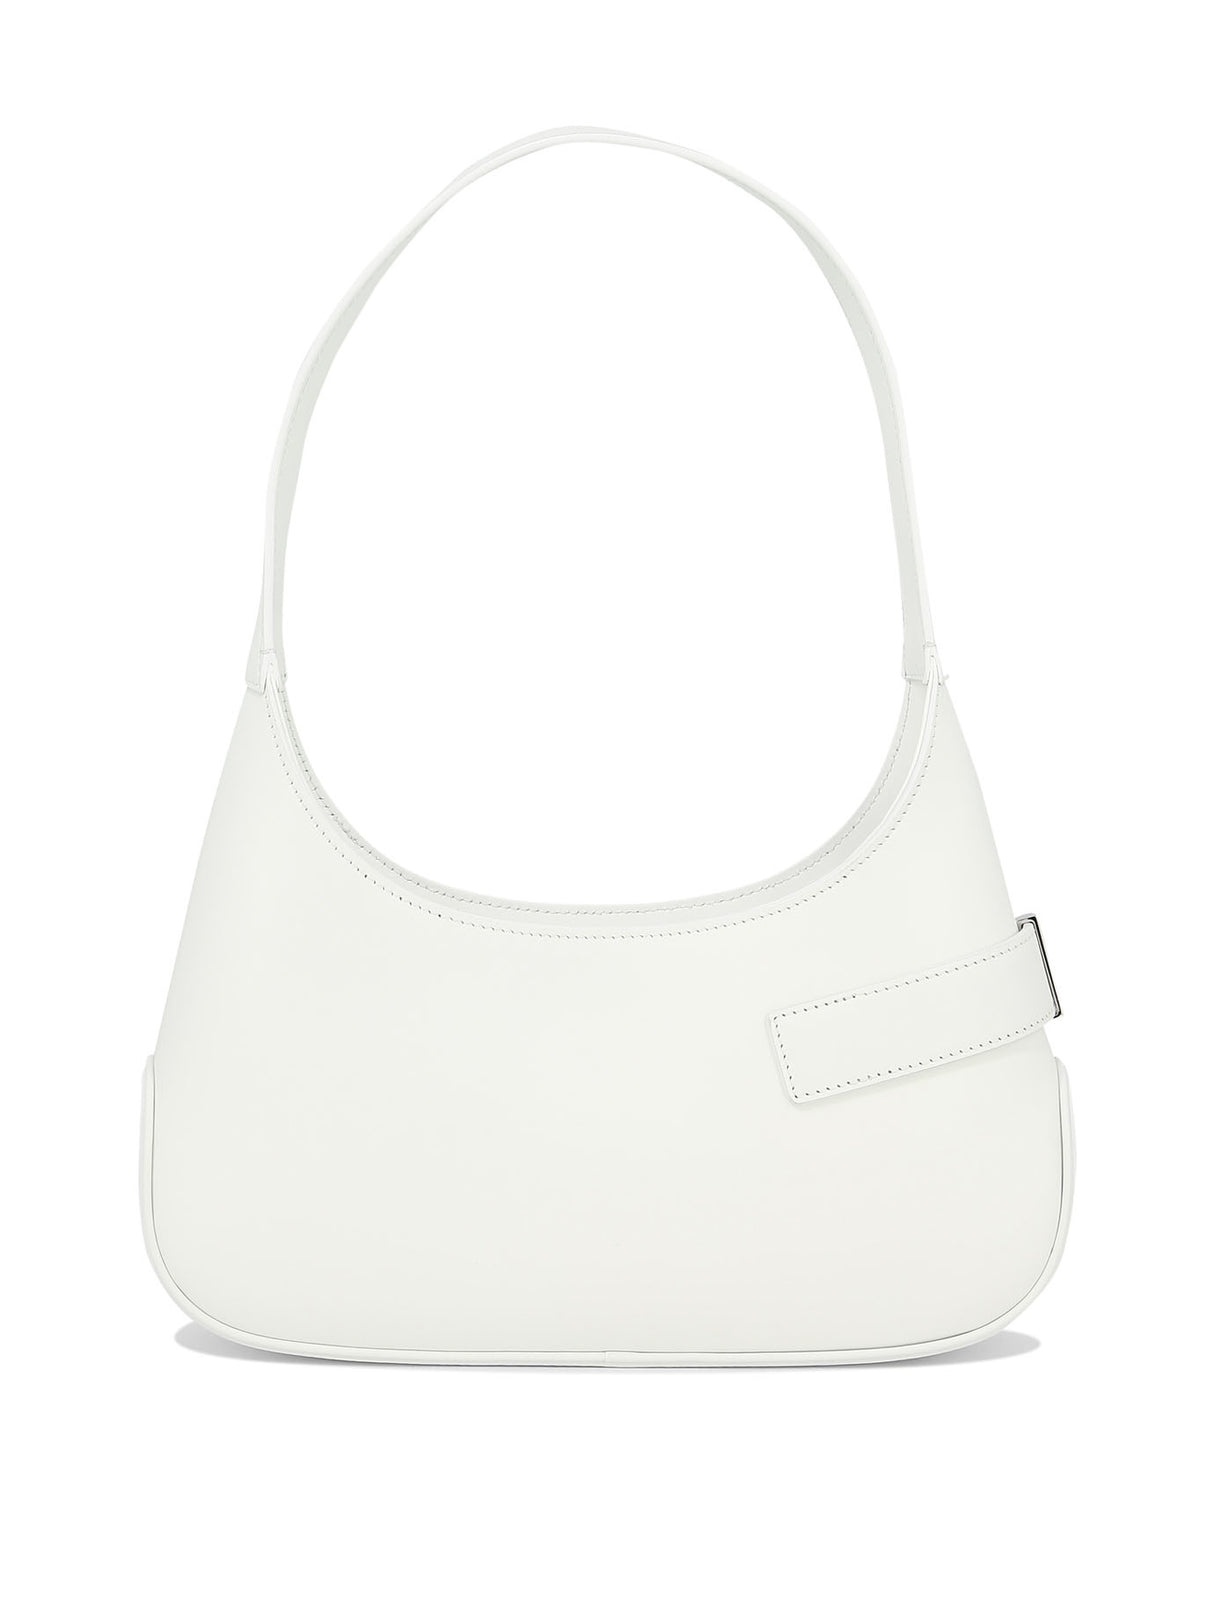 FERRAGAMO White Asymmetric Hobo Shoulder Bag